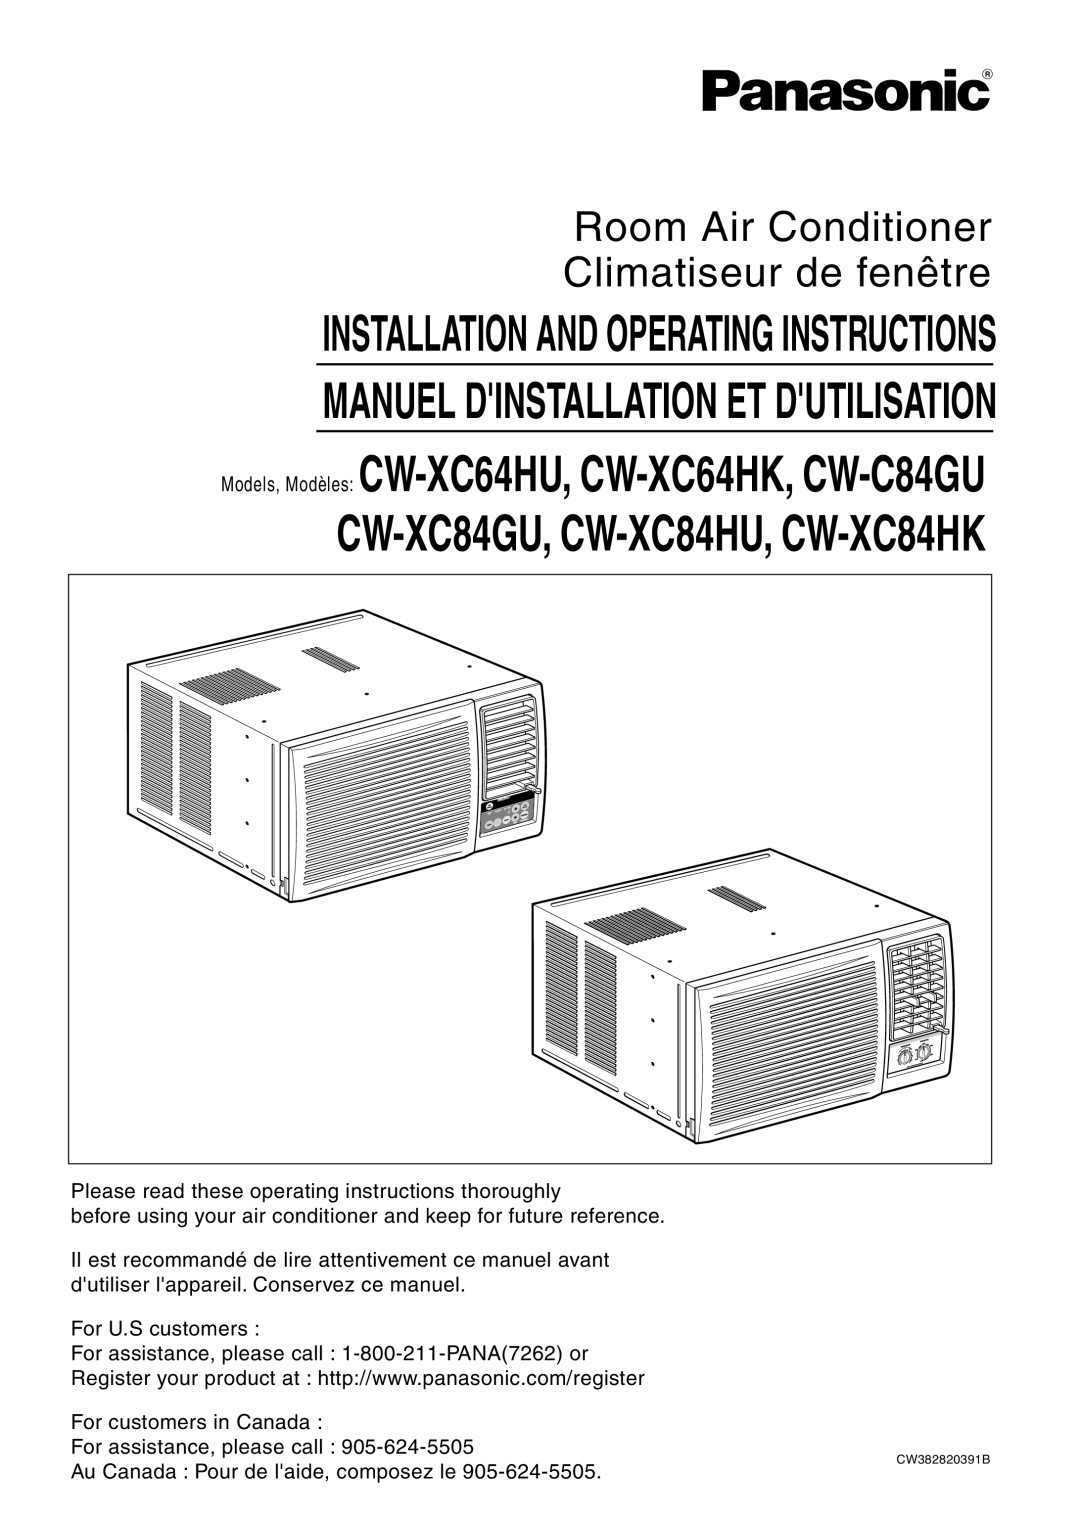 Panasonic manual Models, Modèles: CW-XC64HU, CW-XC64HK, CW-C84GU, Installation And Operating Instructions 